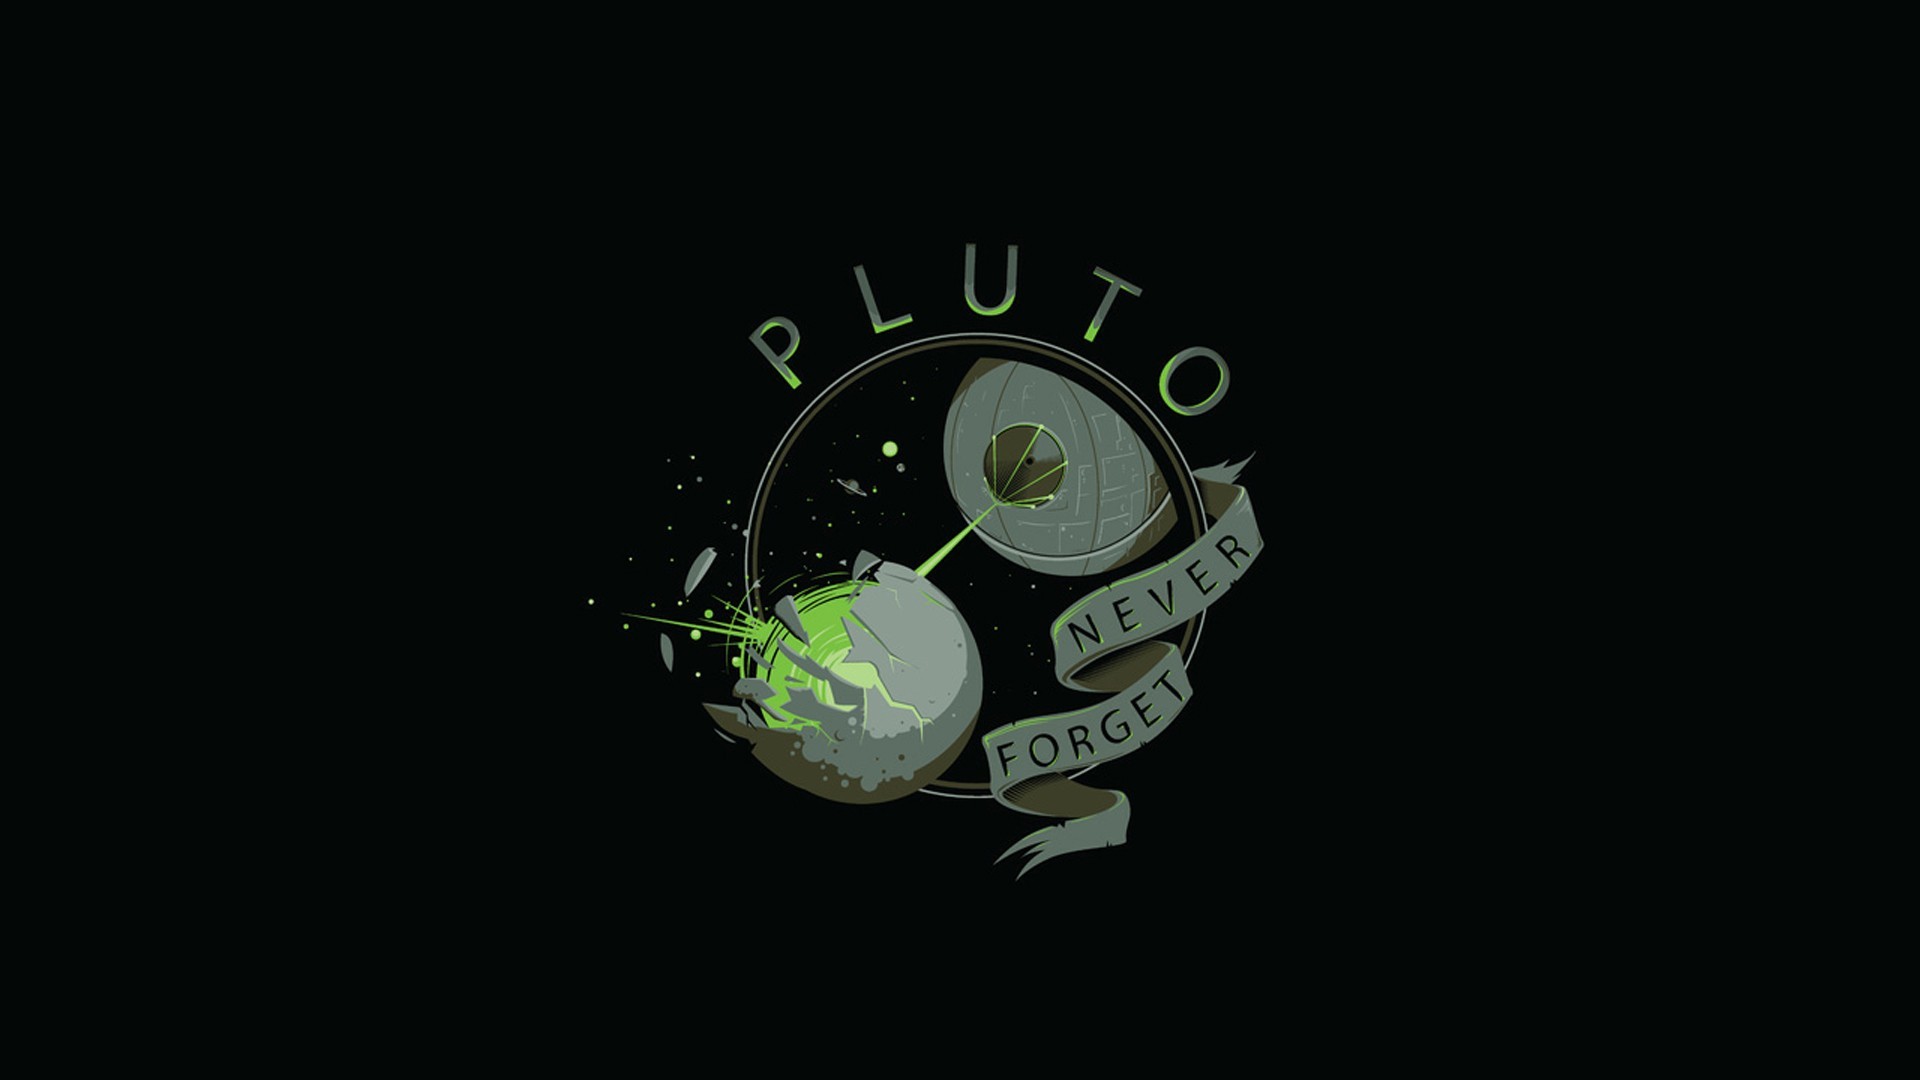 General 1920x1080 Pluto space science fiction dark humor humor planet minimalism simple background Star Wars Death Star